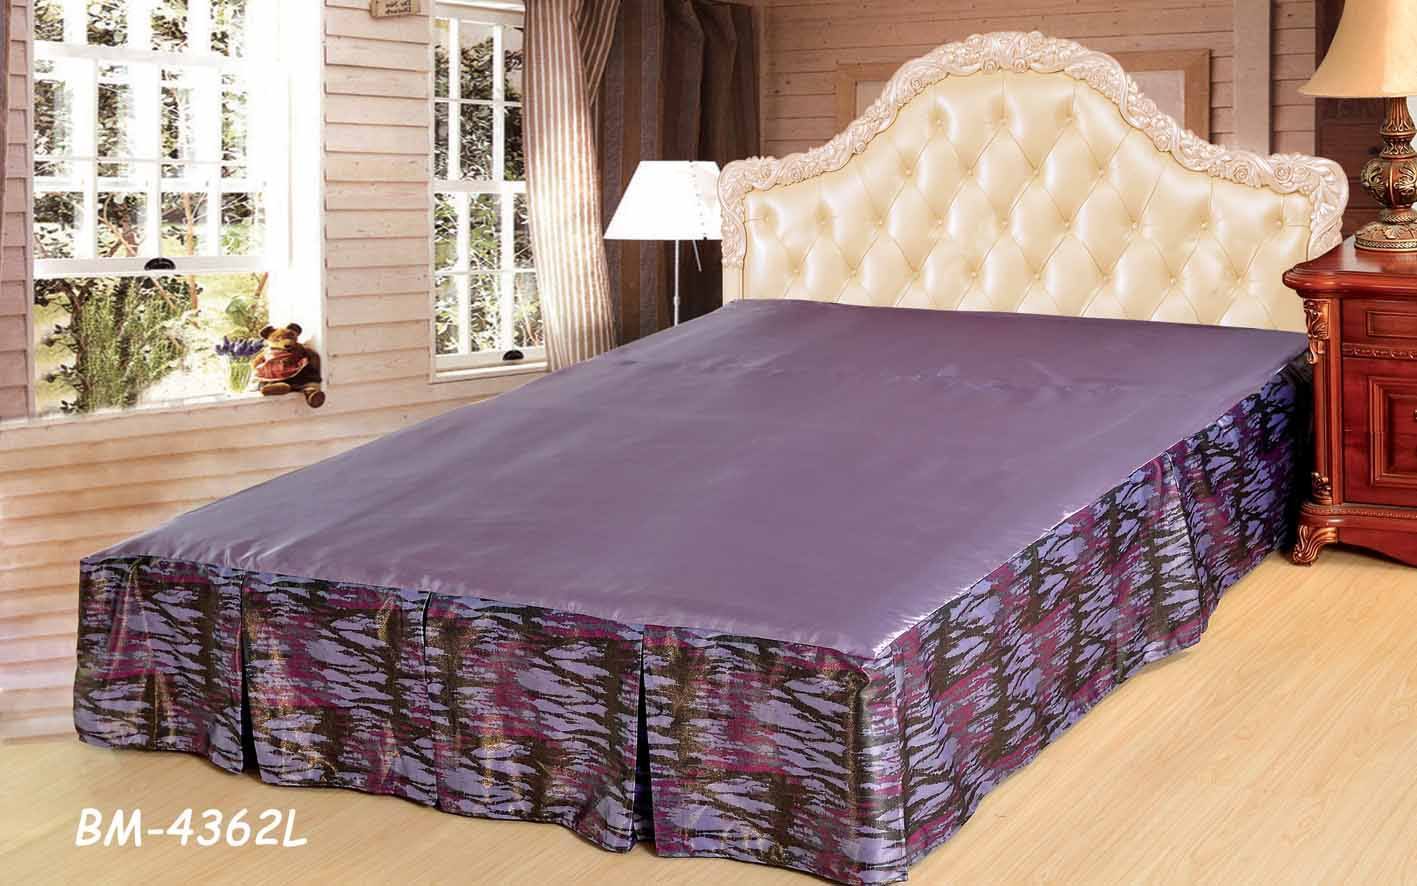 Tache Abstract Mixed Purple Satin Tailored Platform 14" Bed Skirt Dust Ruffle (BSK-4362L) - Tache Home Fashion